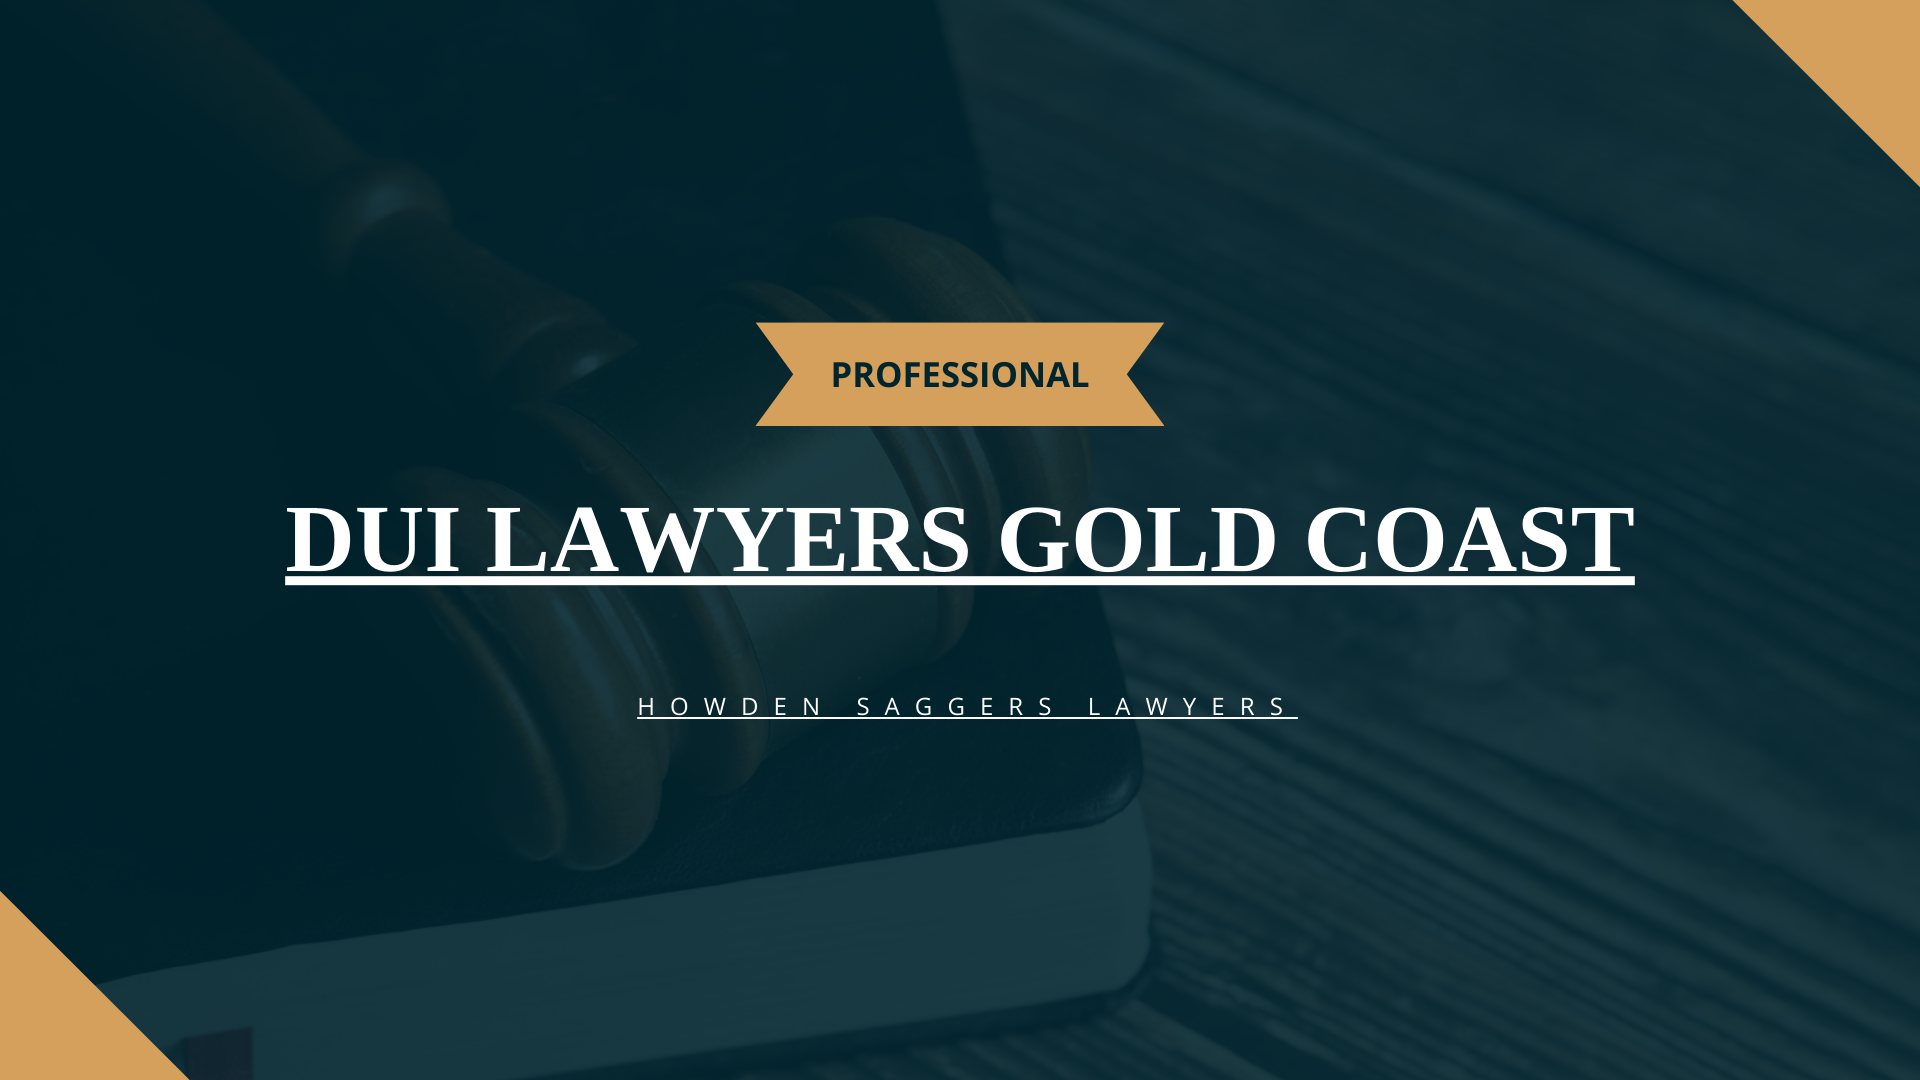  Make good effort to find dui lawyers gold coast